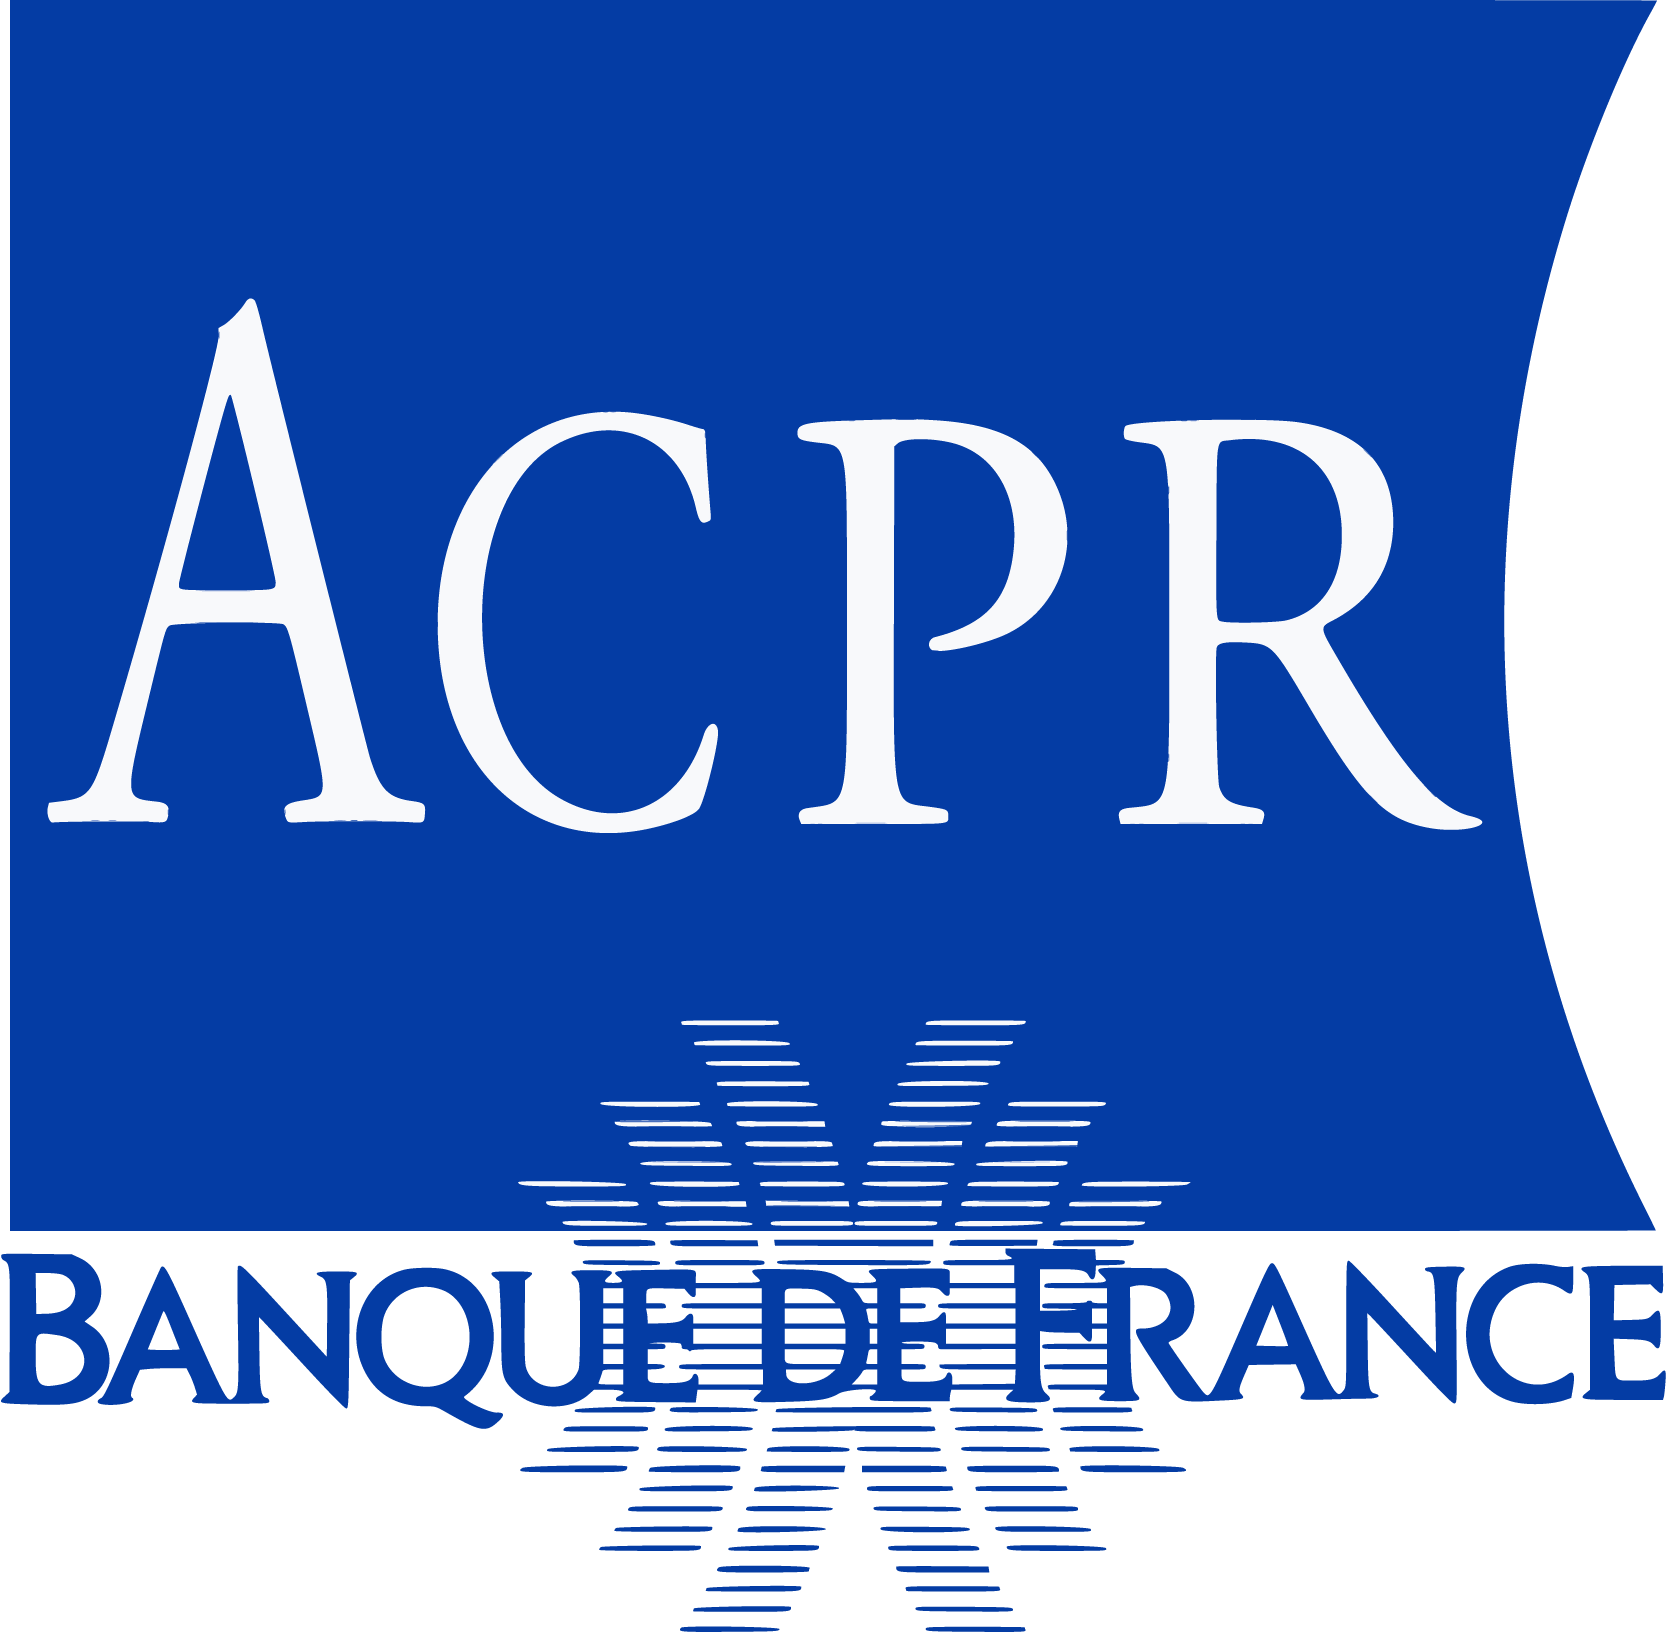 ACPR Banque de France